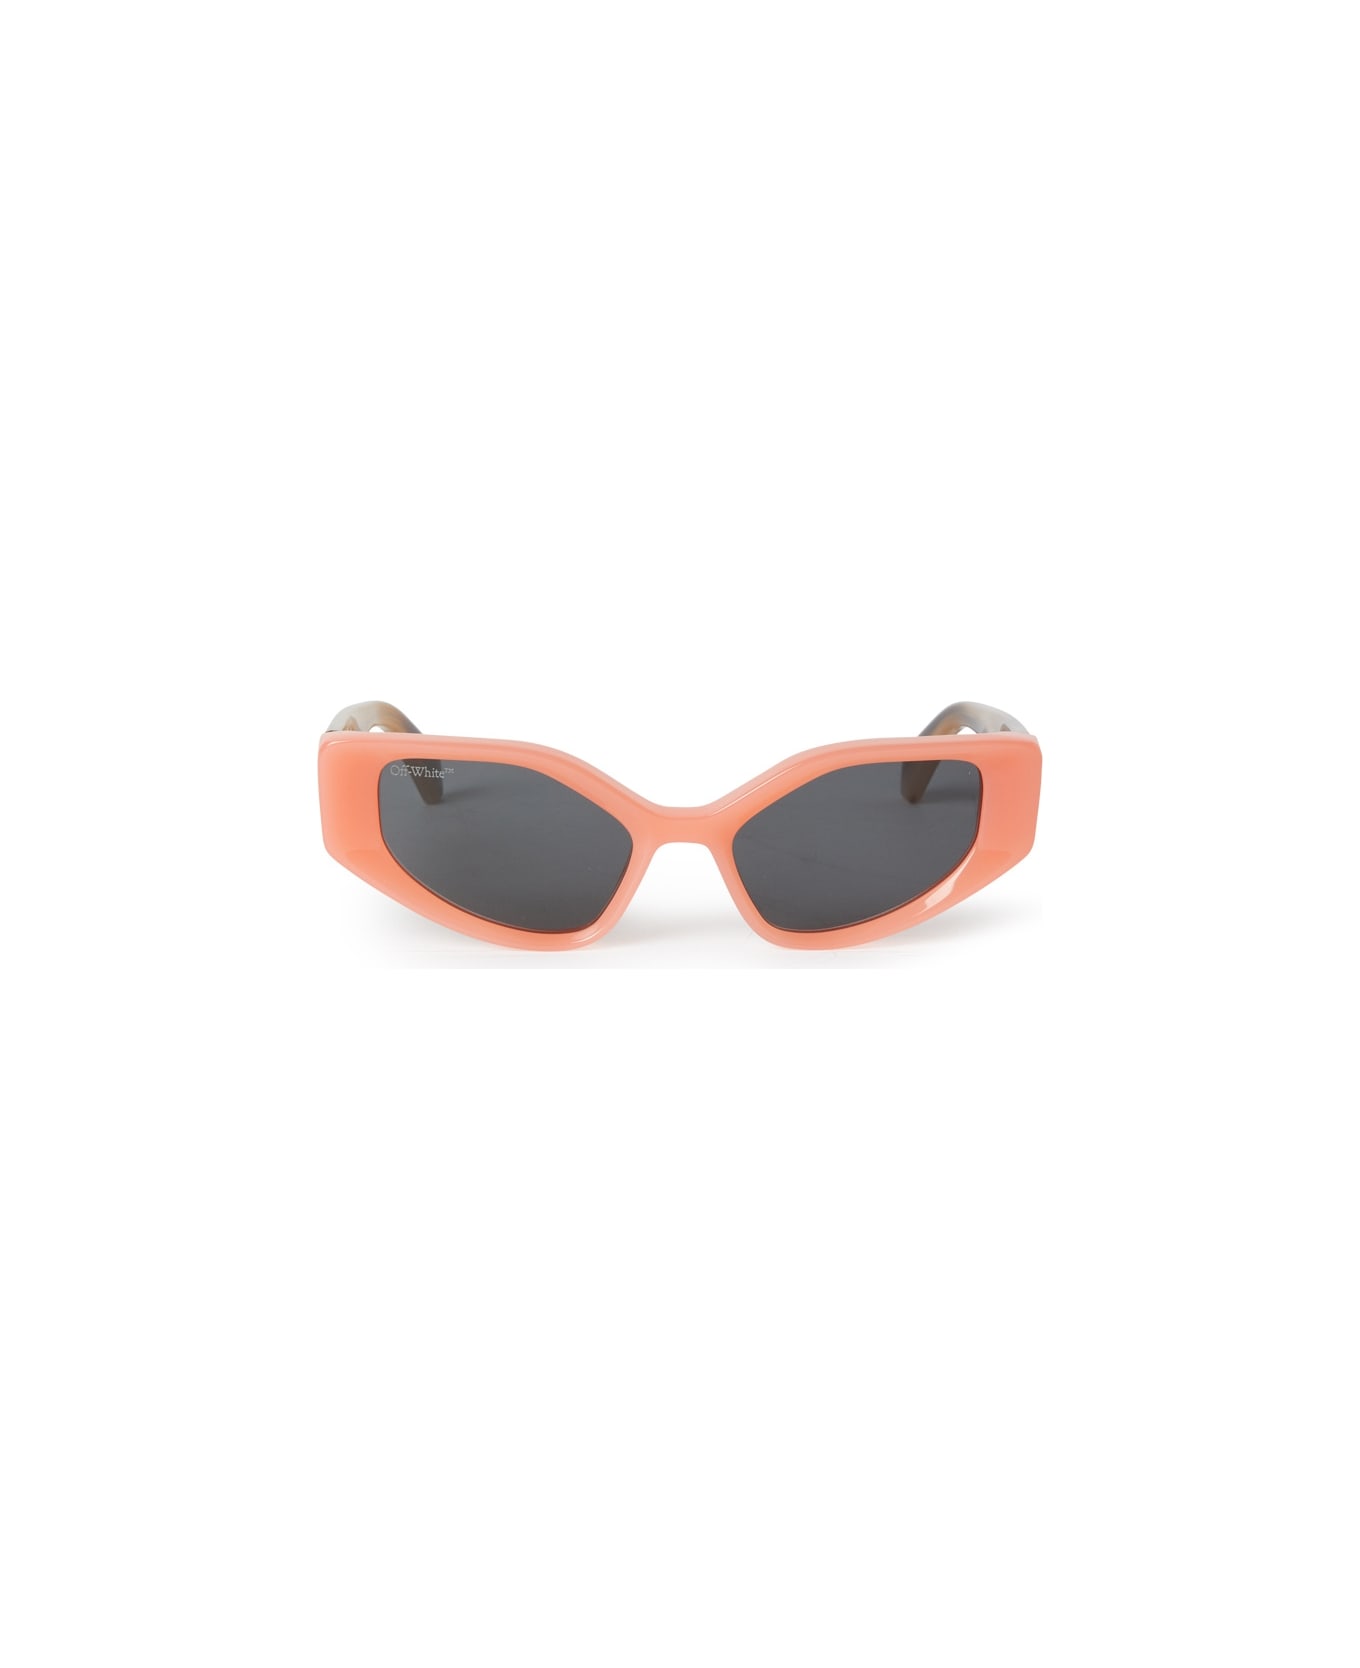 Off-White MEMPHIS SUNGLASSES Sunglasses - Orange サングラス